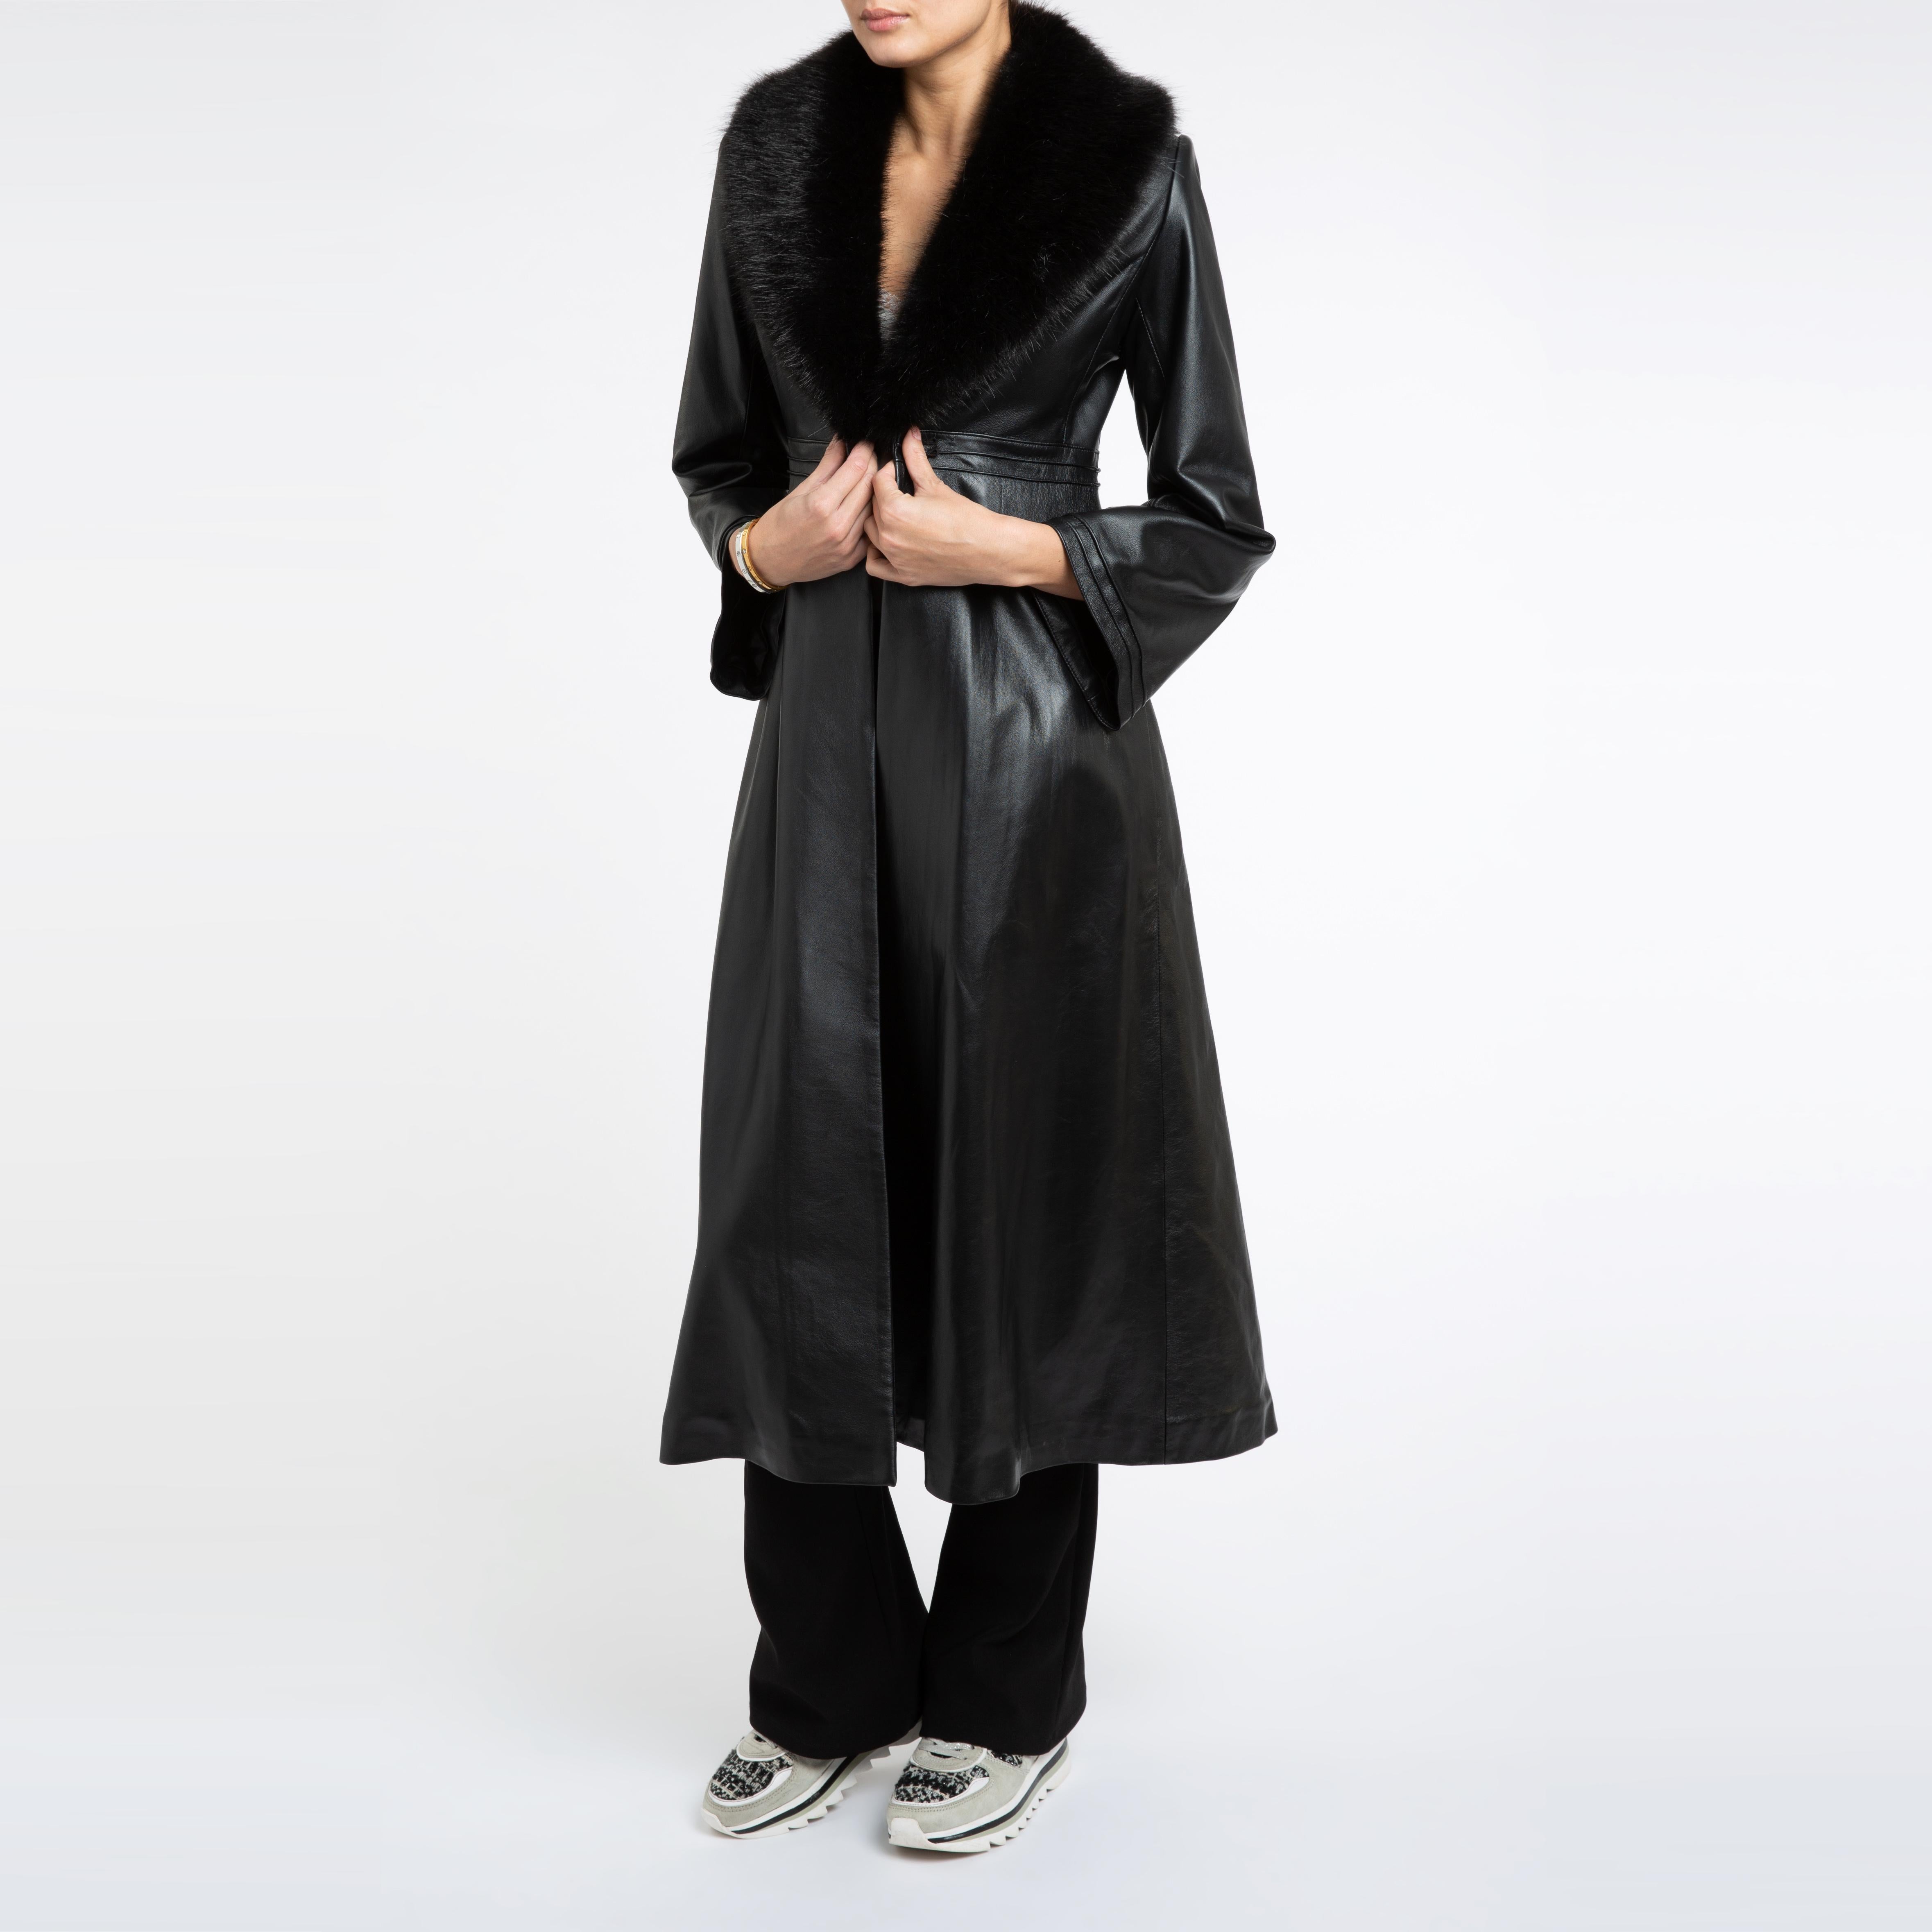 Women's Verheyen London Edward Leather Coat with Faux Fur Collar in Black - Size uk 10 For Sale